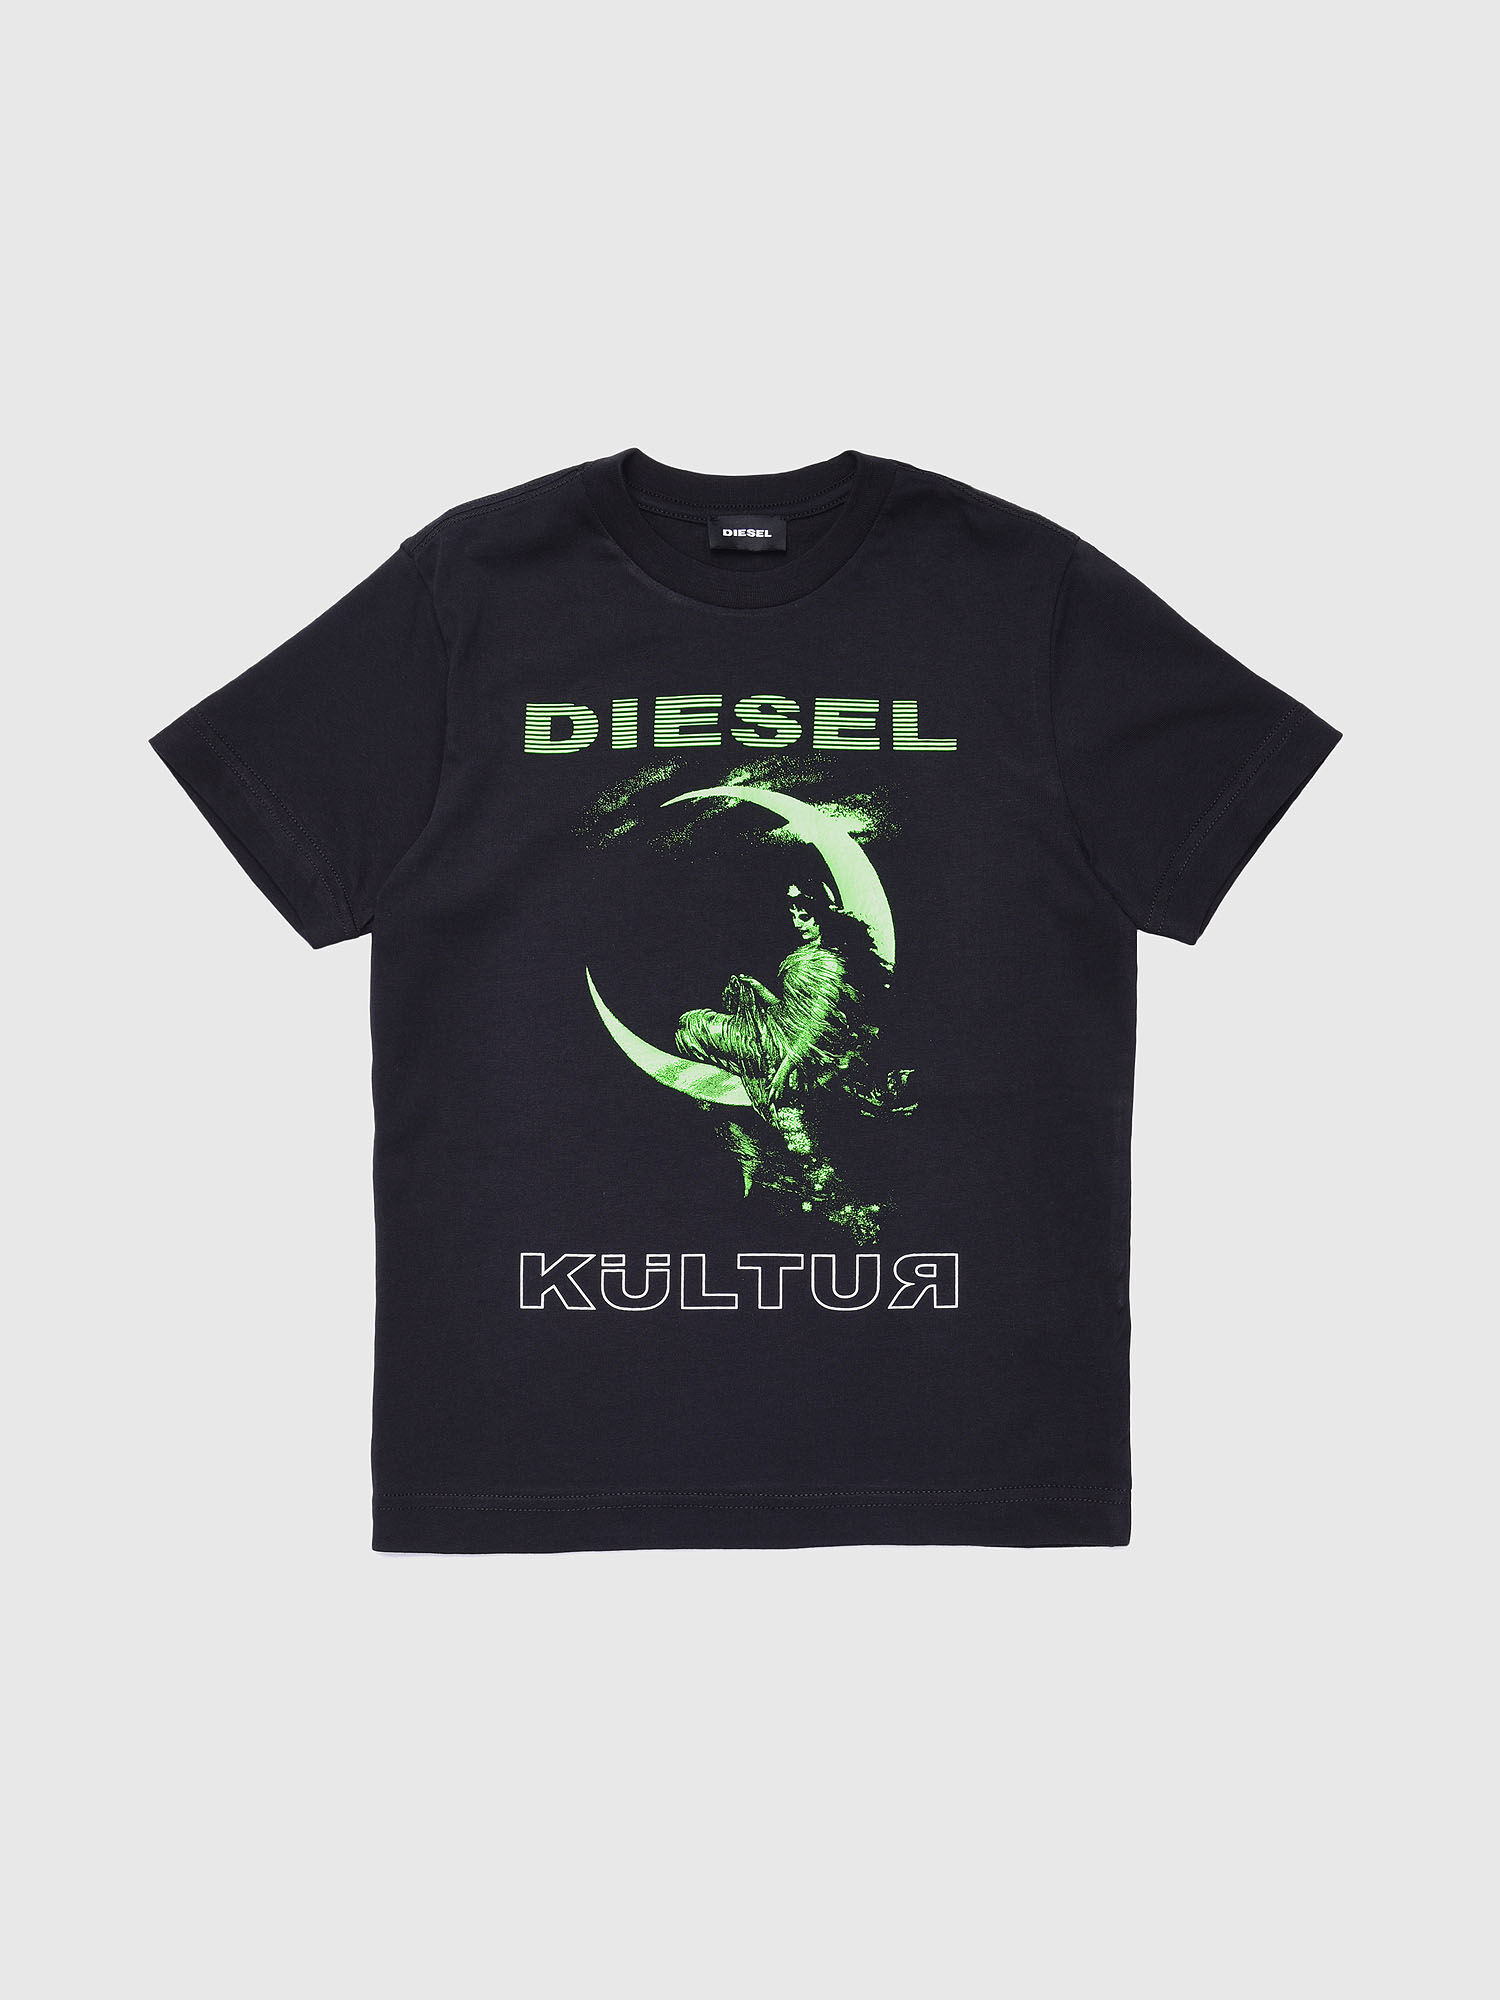 Diesel - TJUSTXS, Black - Image 1